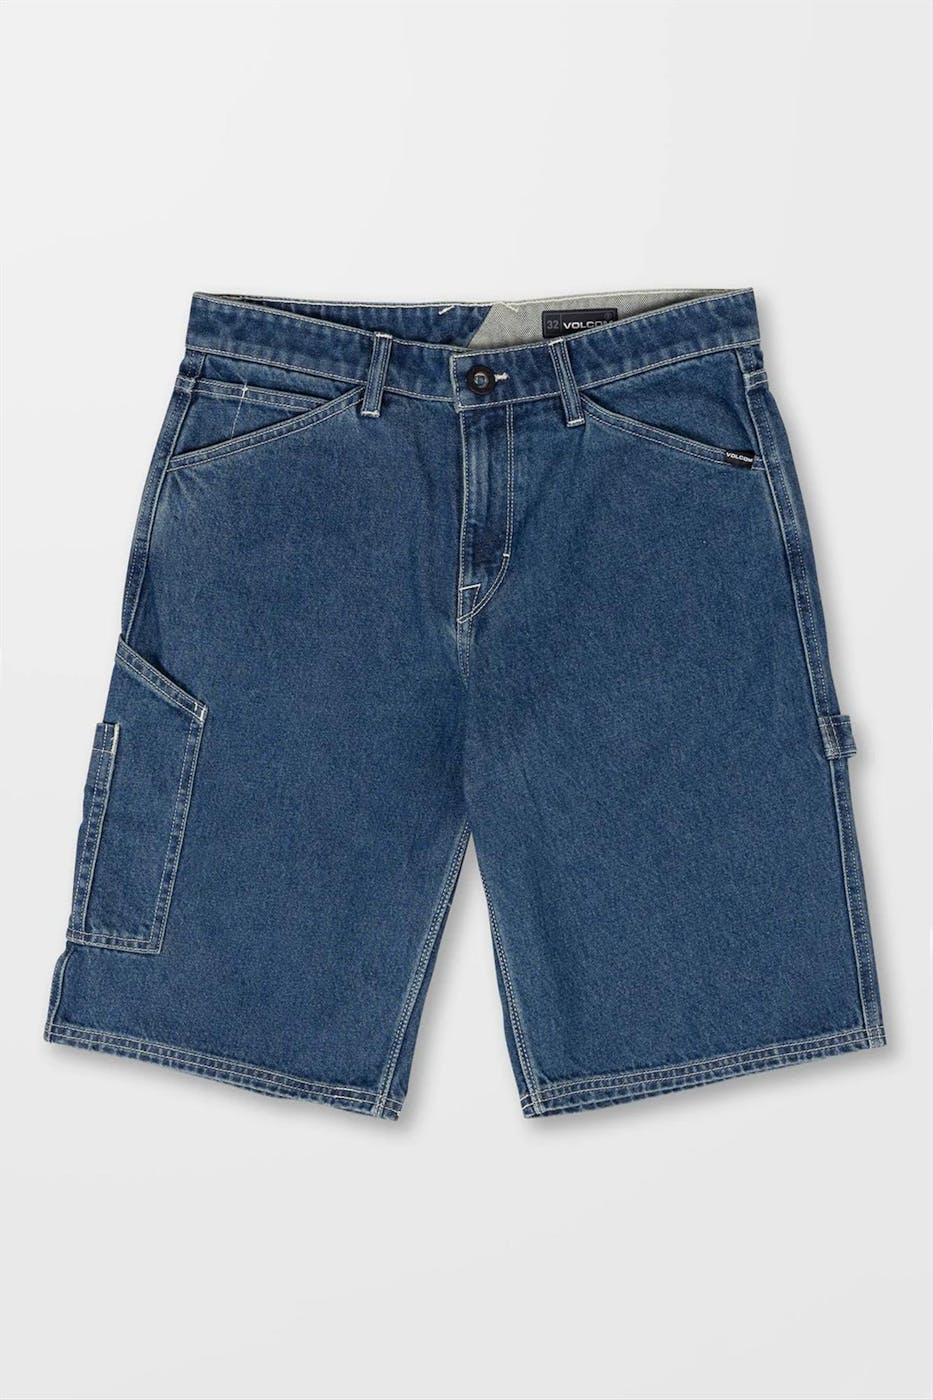 Volcom - Blauwe Labored Utility jeansshort